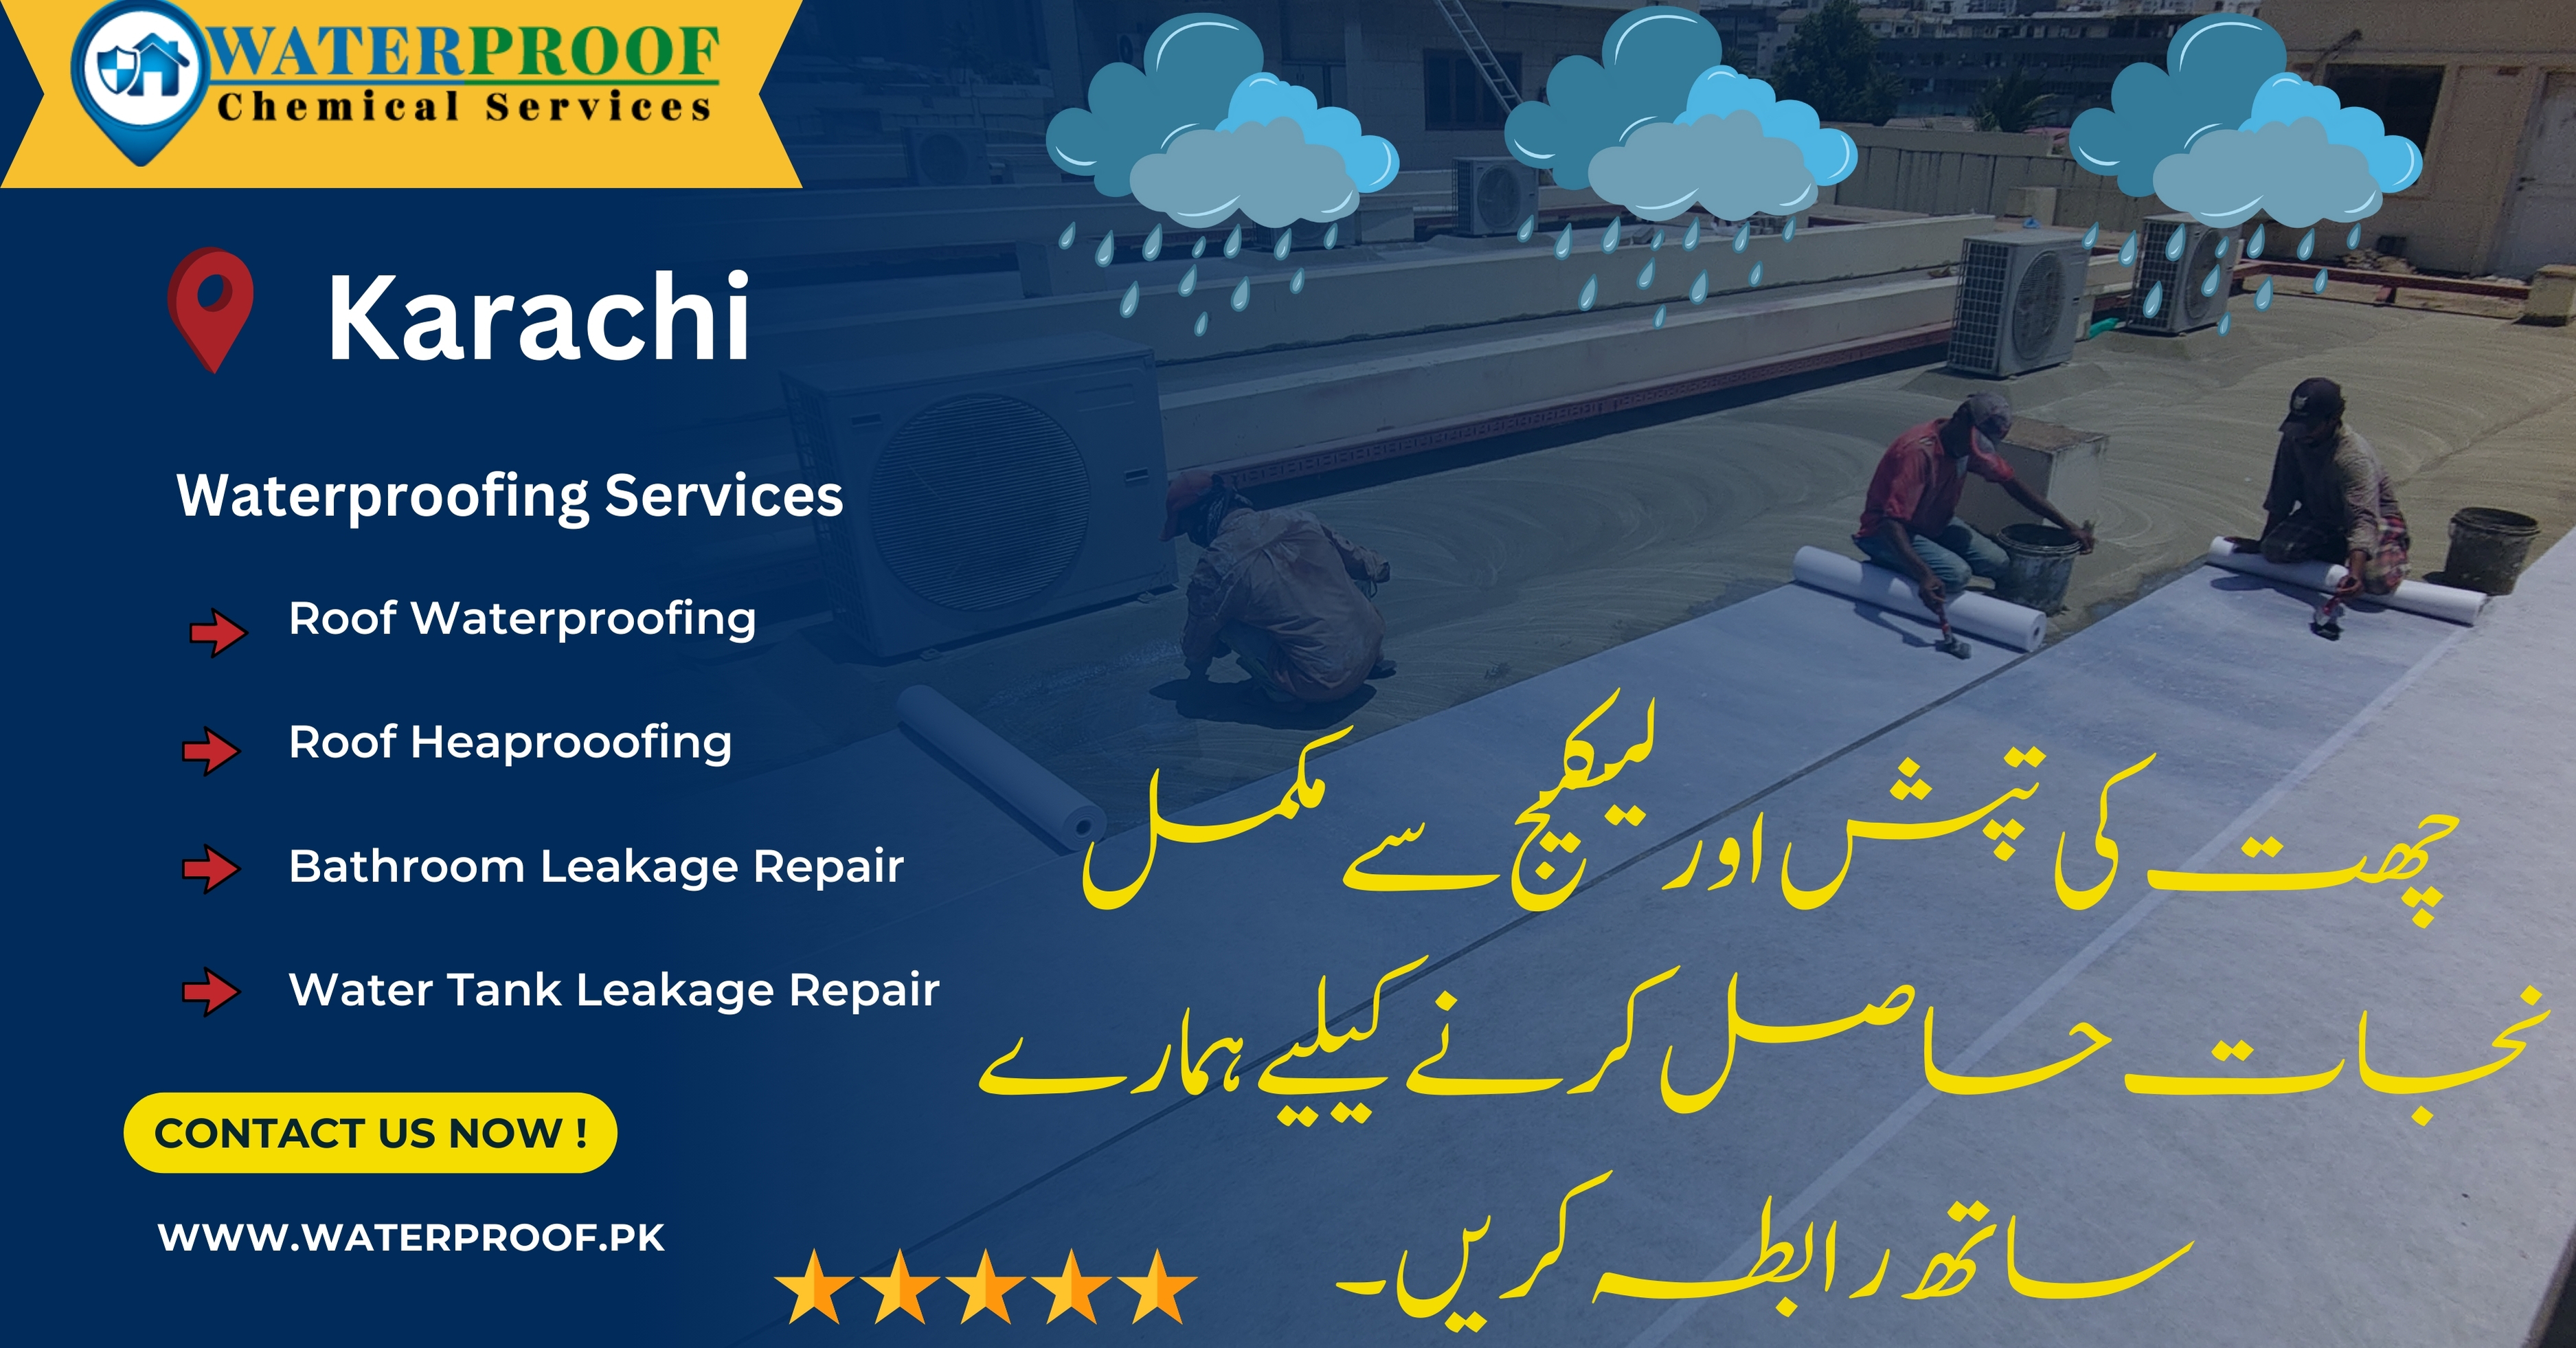 WATERPROOF

Chemical Services

    

VE rE AE
‘

Karachi a1

Waterproofing Services

Roof Waterproofing

Roof Heaprooofing E,
Bathroom Leakage Repair past hy

Water Tank Leakage Repair
a
g

WWW. WATERPROOF.PK